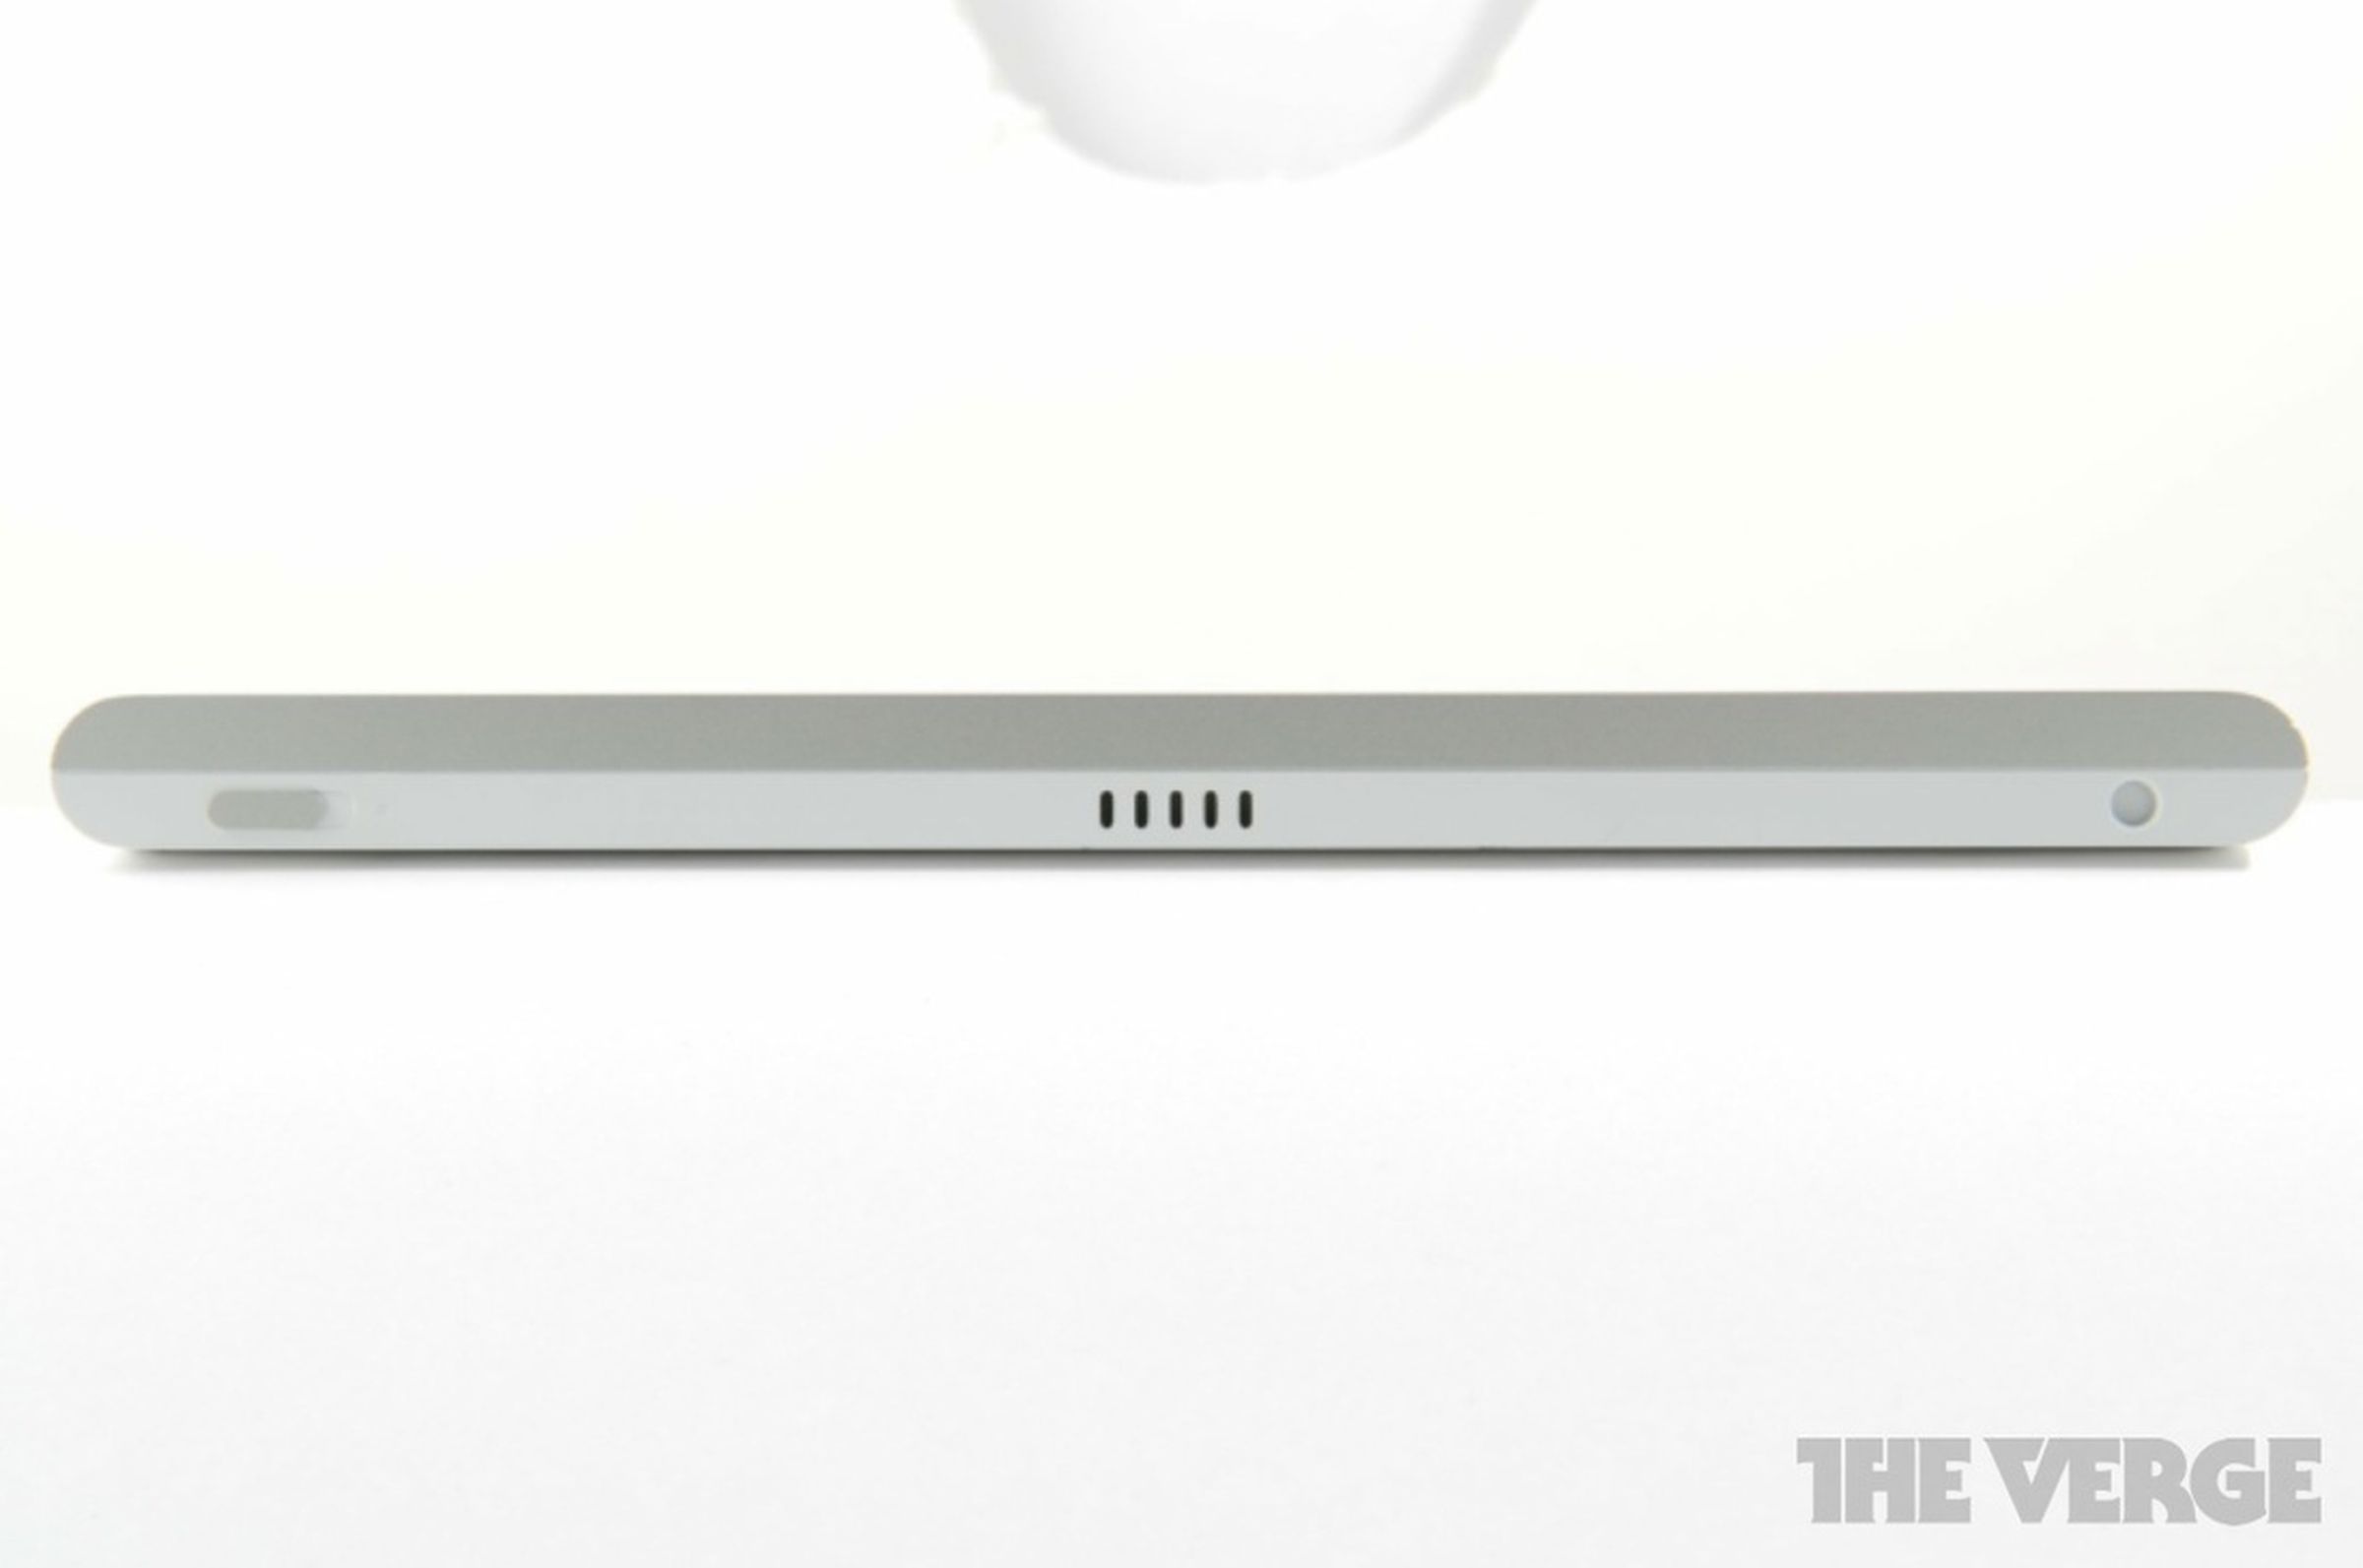 Apple iPad prototype photos